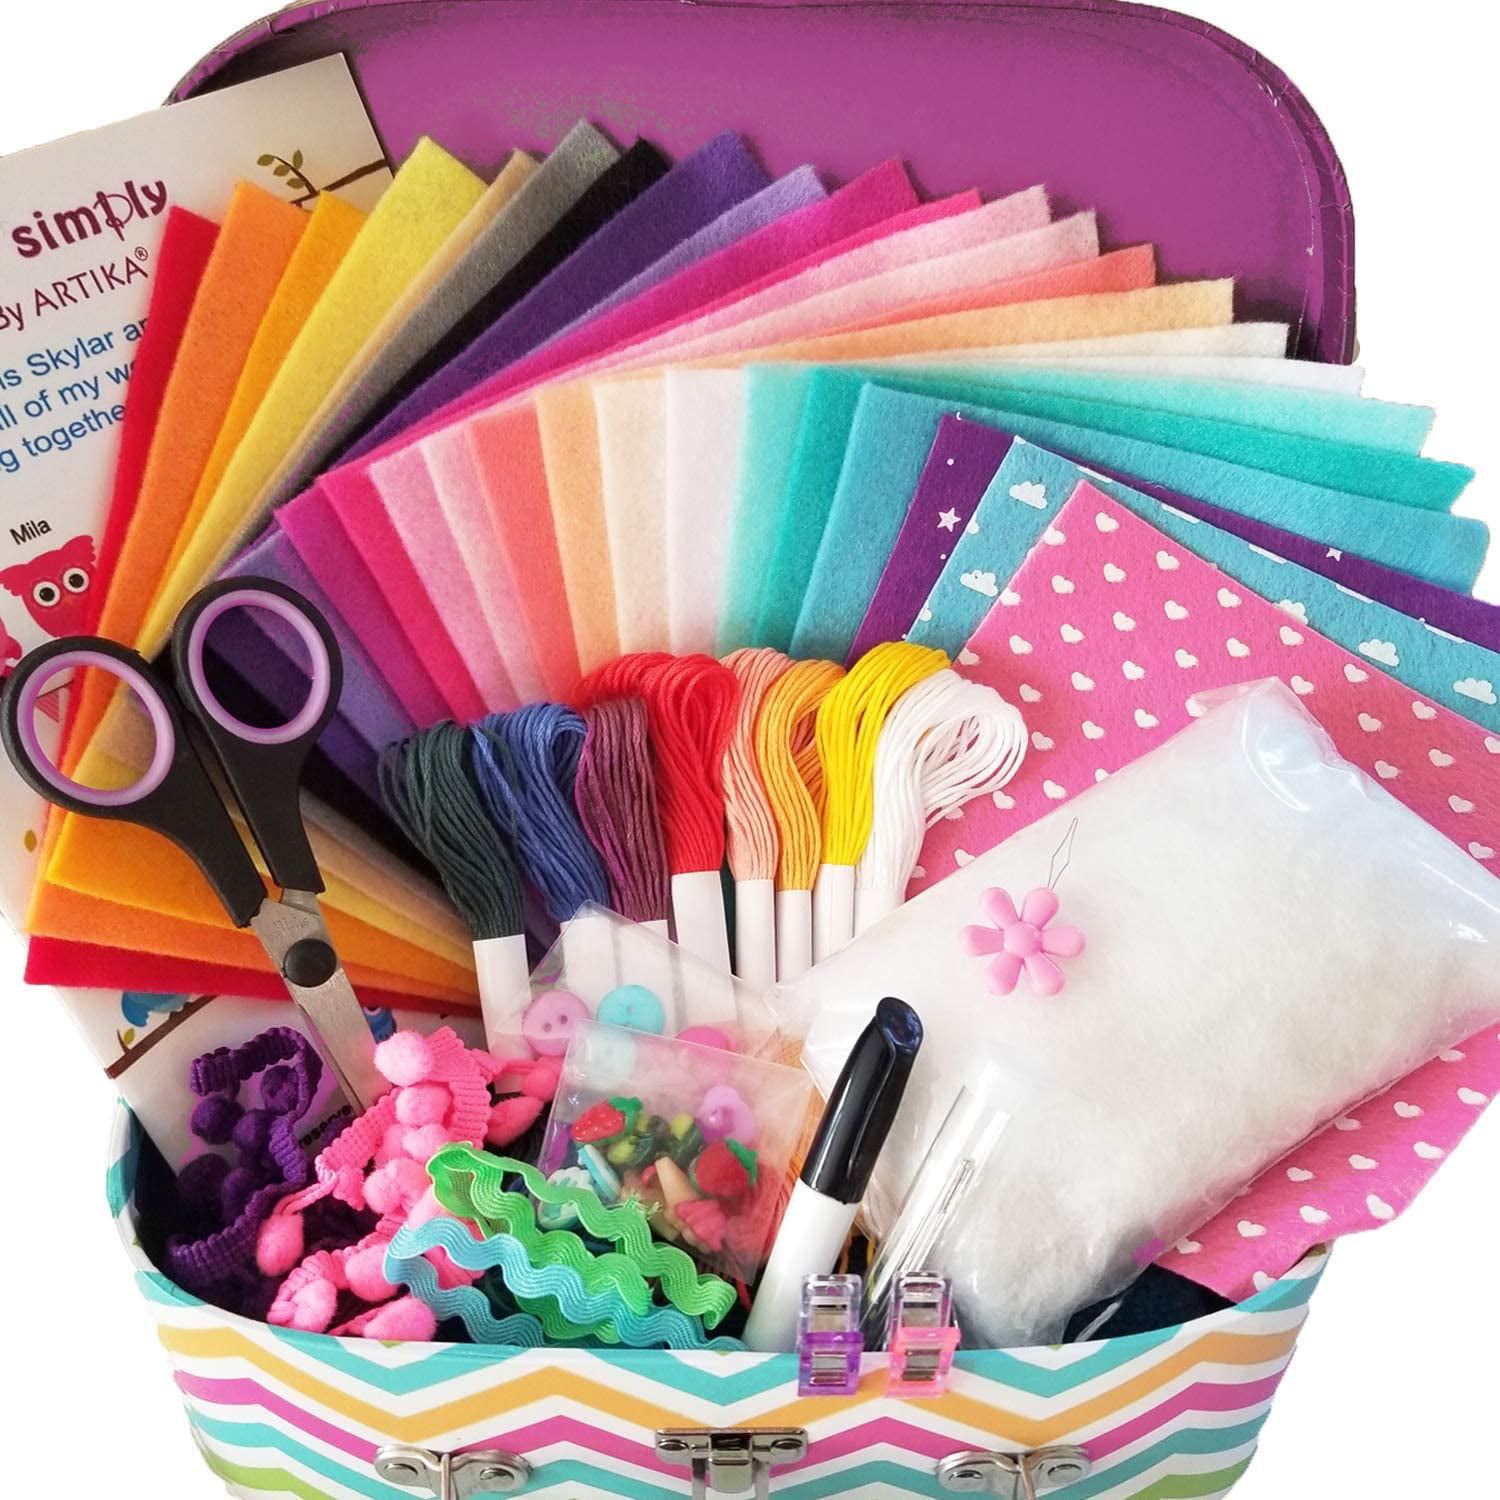  Kids' Sewing Kits - Fabric / Kids' Sewing Kits / Craft Kits:  Toys & Games